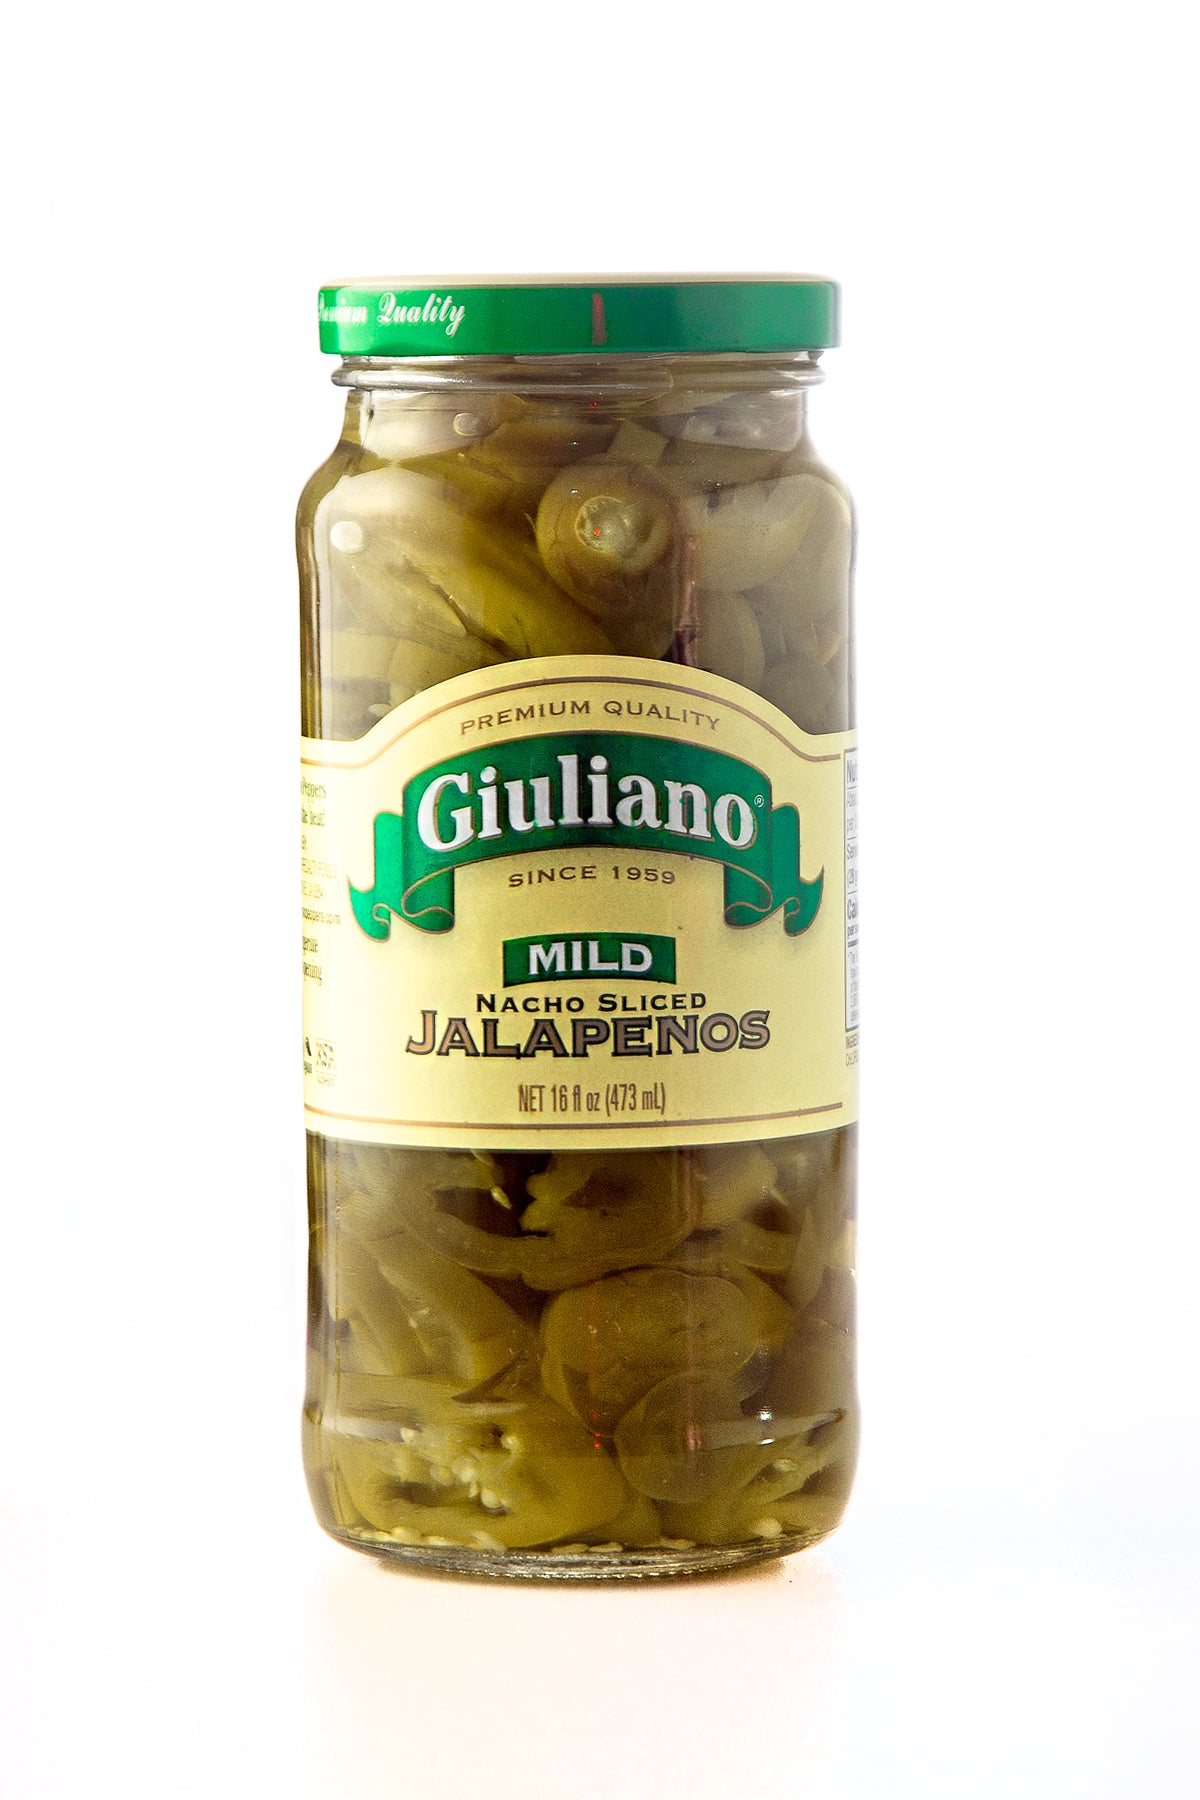 Giuliano - Mild Nacho Sliced Jalapeños